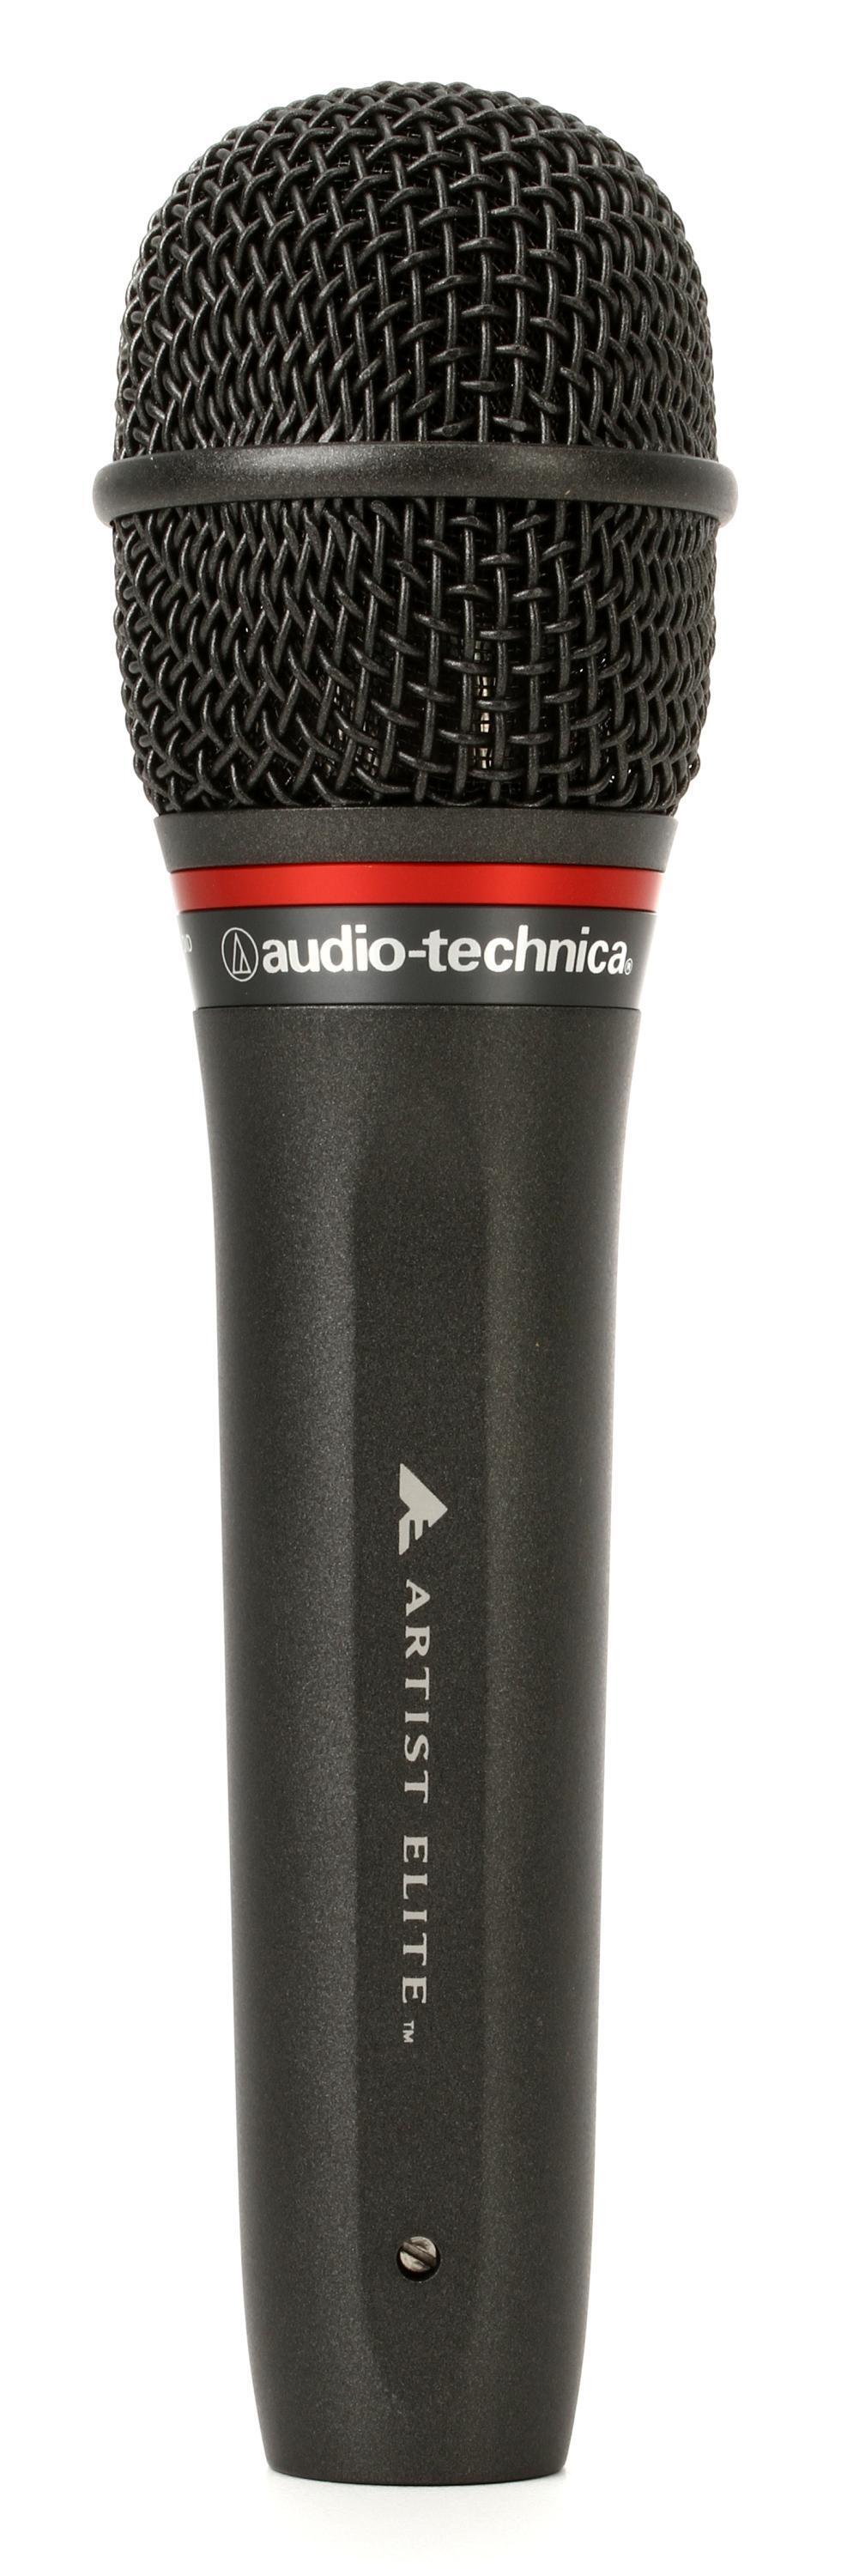 Bundled Item: Audio-Technica AE6100 Hypercardioid Dynamic Vocal Microphone